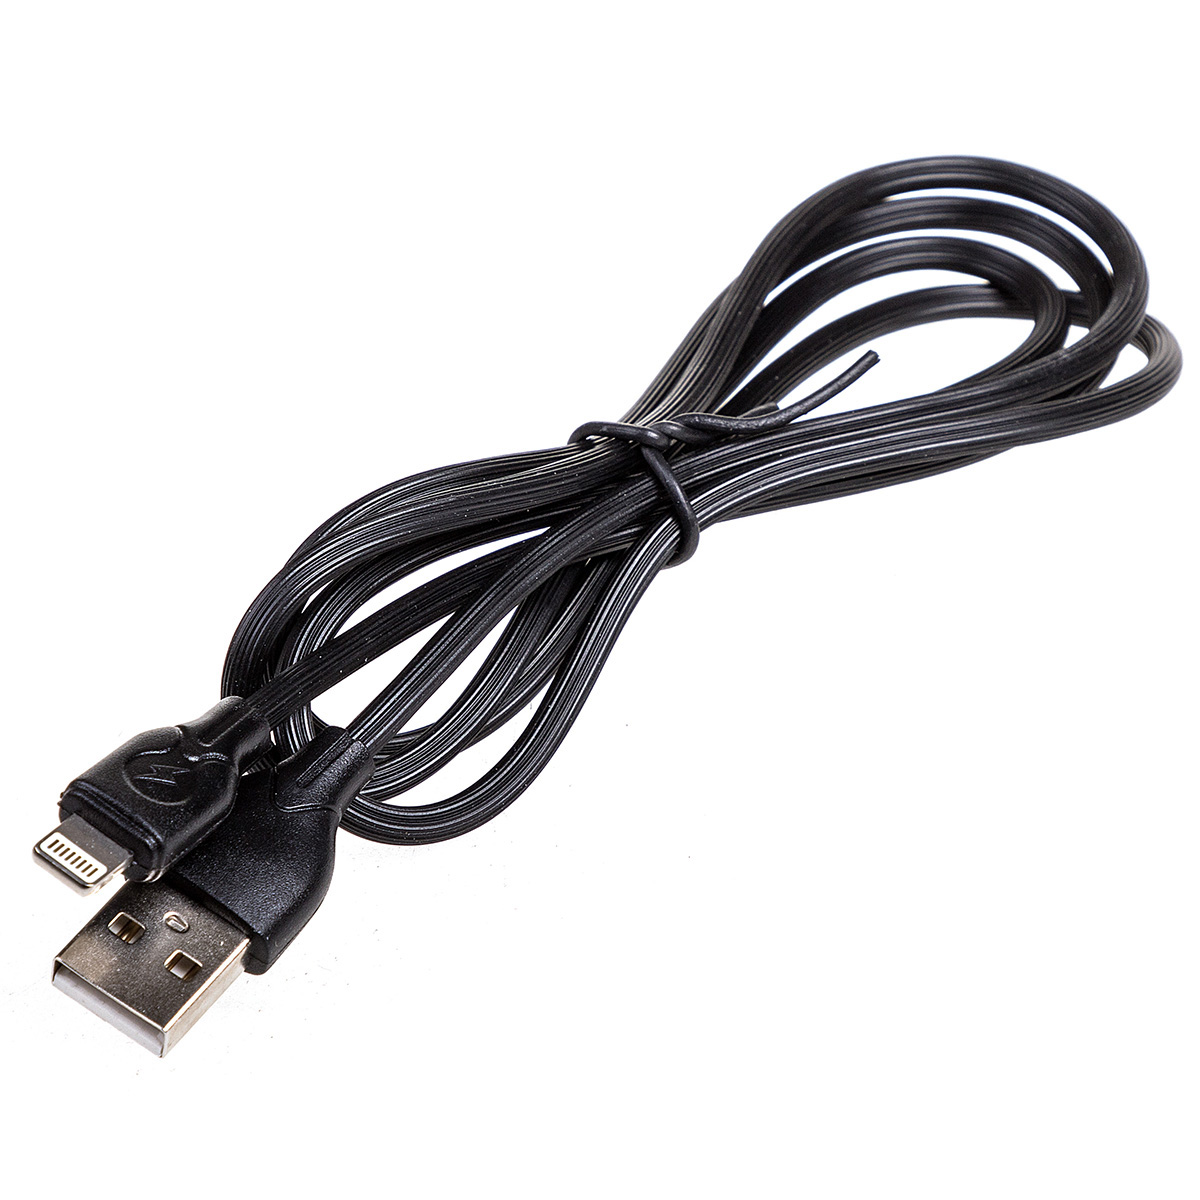 Кабель USB skyway Iphone/Ipad/microUSB (Lightning/microUSB) 3.0а 1м Черный в коробке s09601002 - SKYWAY S09601002